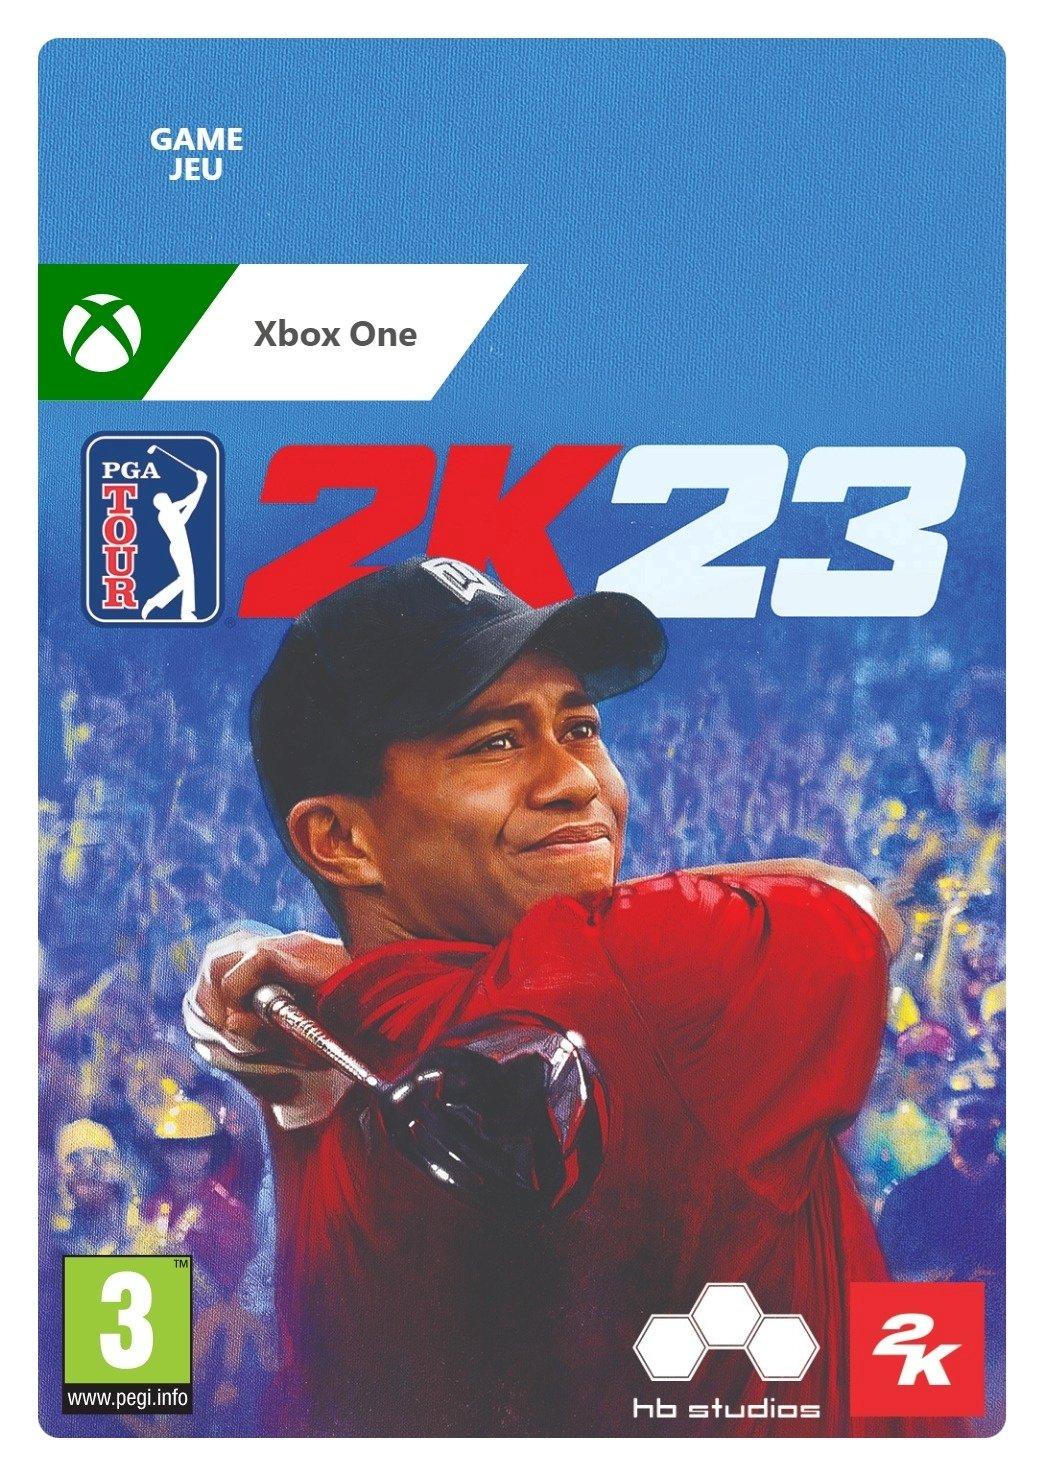 PGA Tour 2K23 - Xbox One - Game | G3Q-01433 (bb64e6ed-b06e-6246-a9a4-1e72efda62ad)